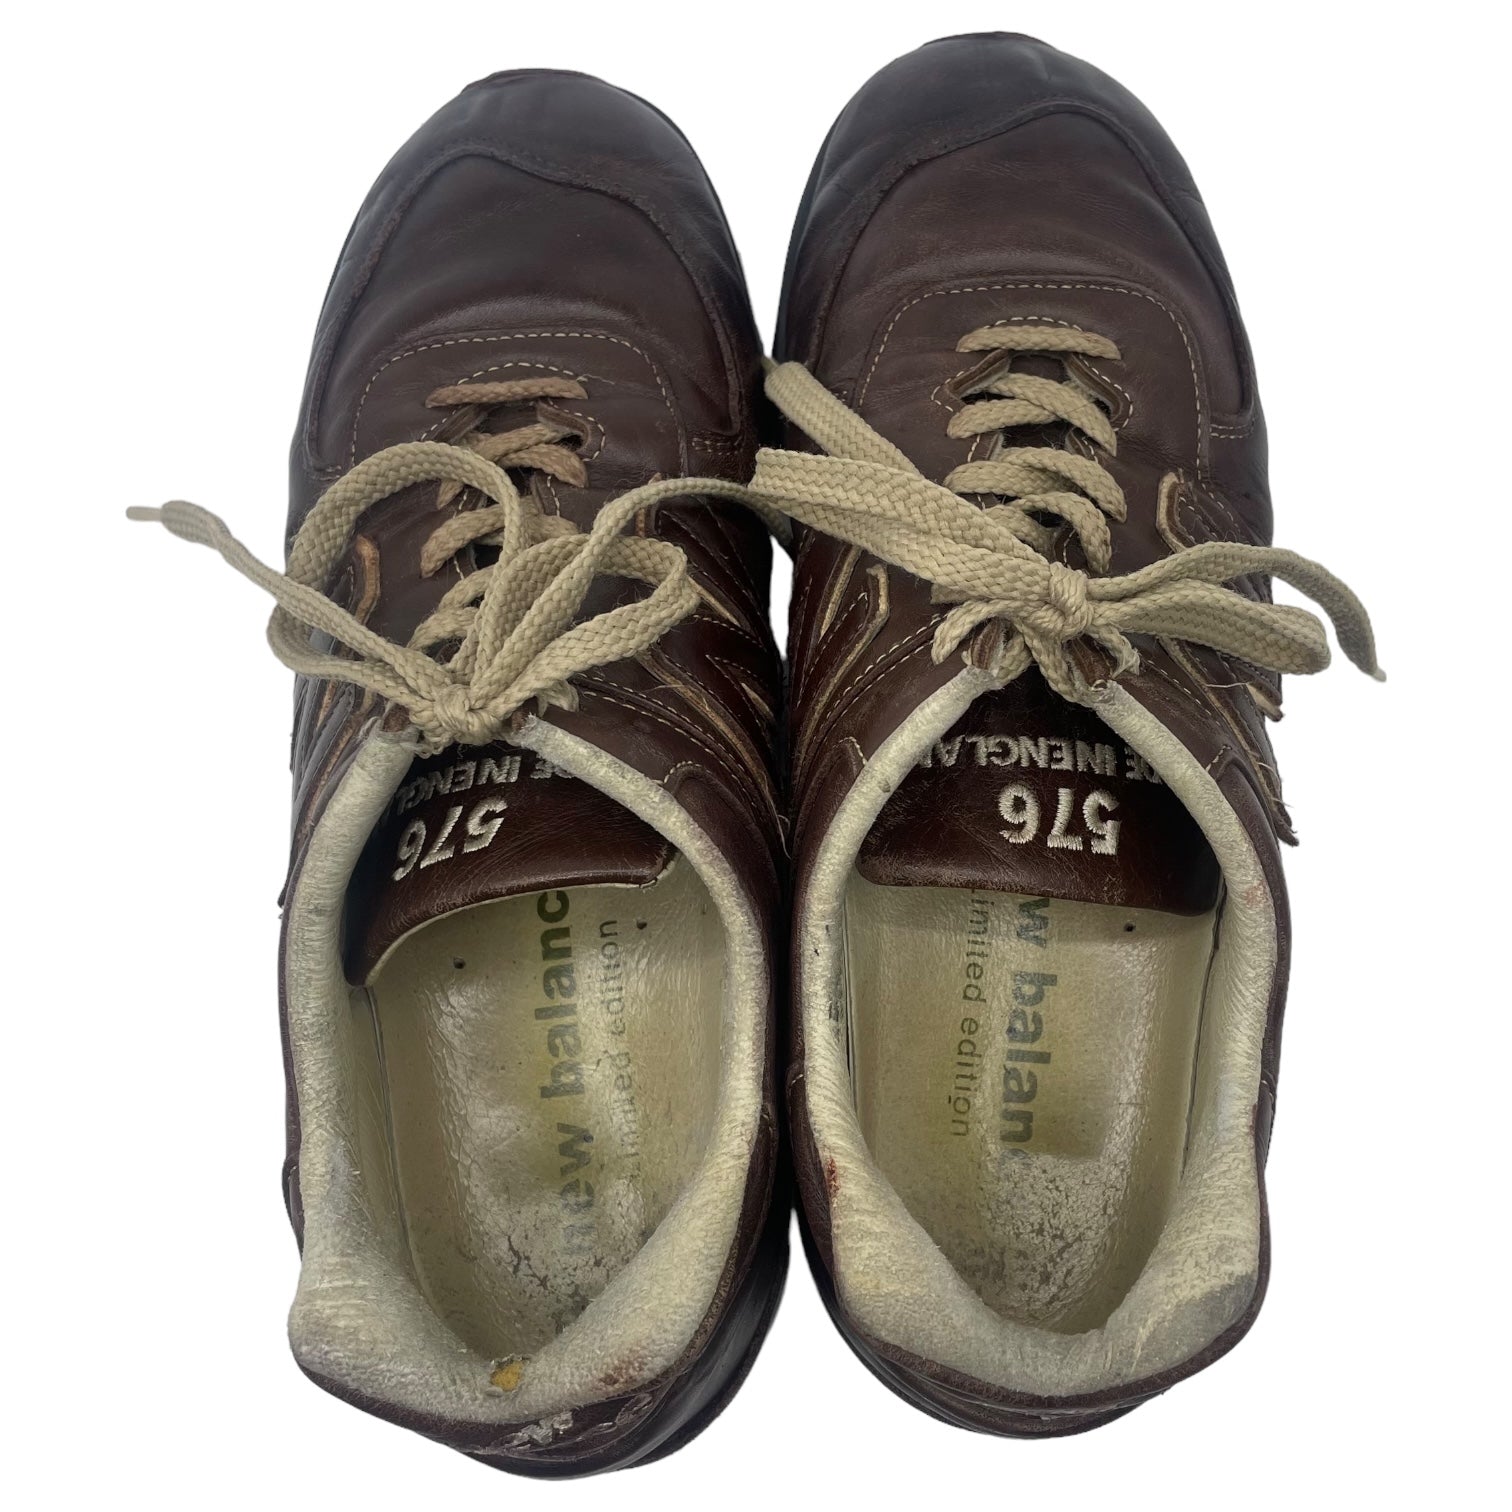 NEW BALANCE(ニューバランス) boots custom leather sneakers 「576 UK 